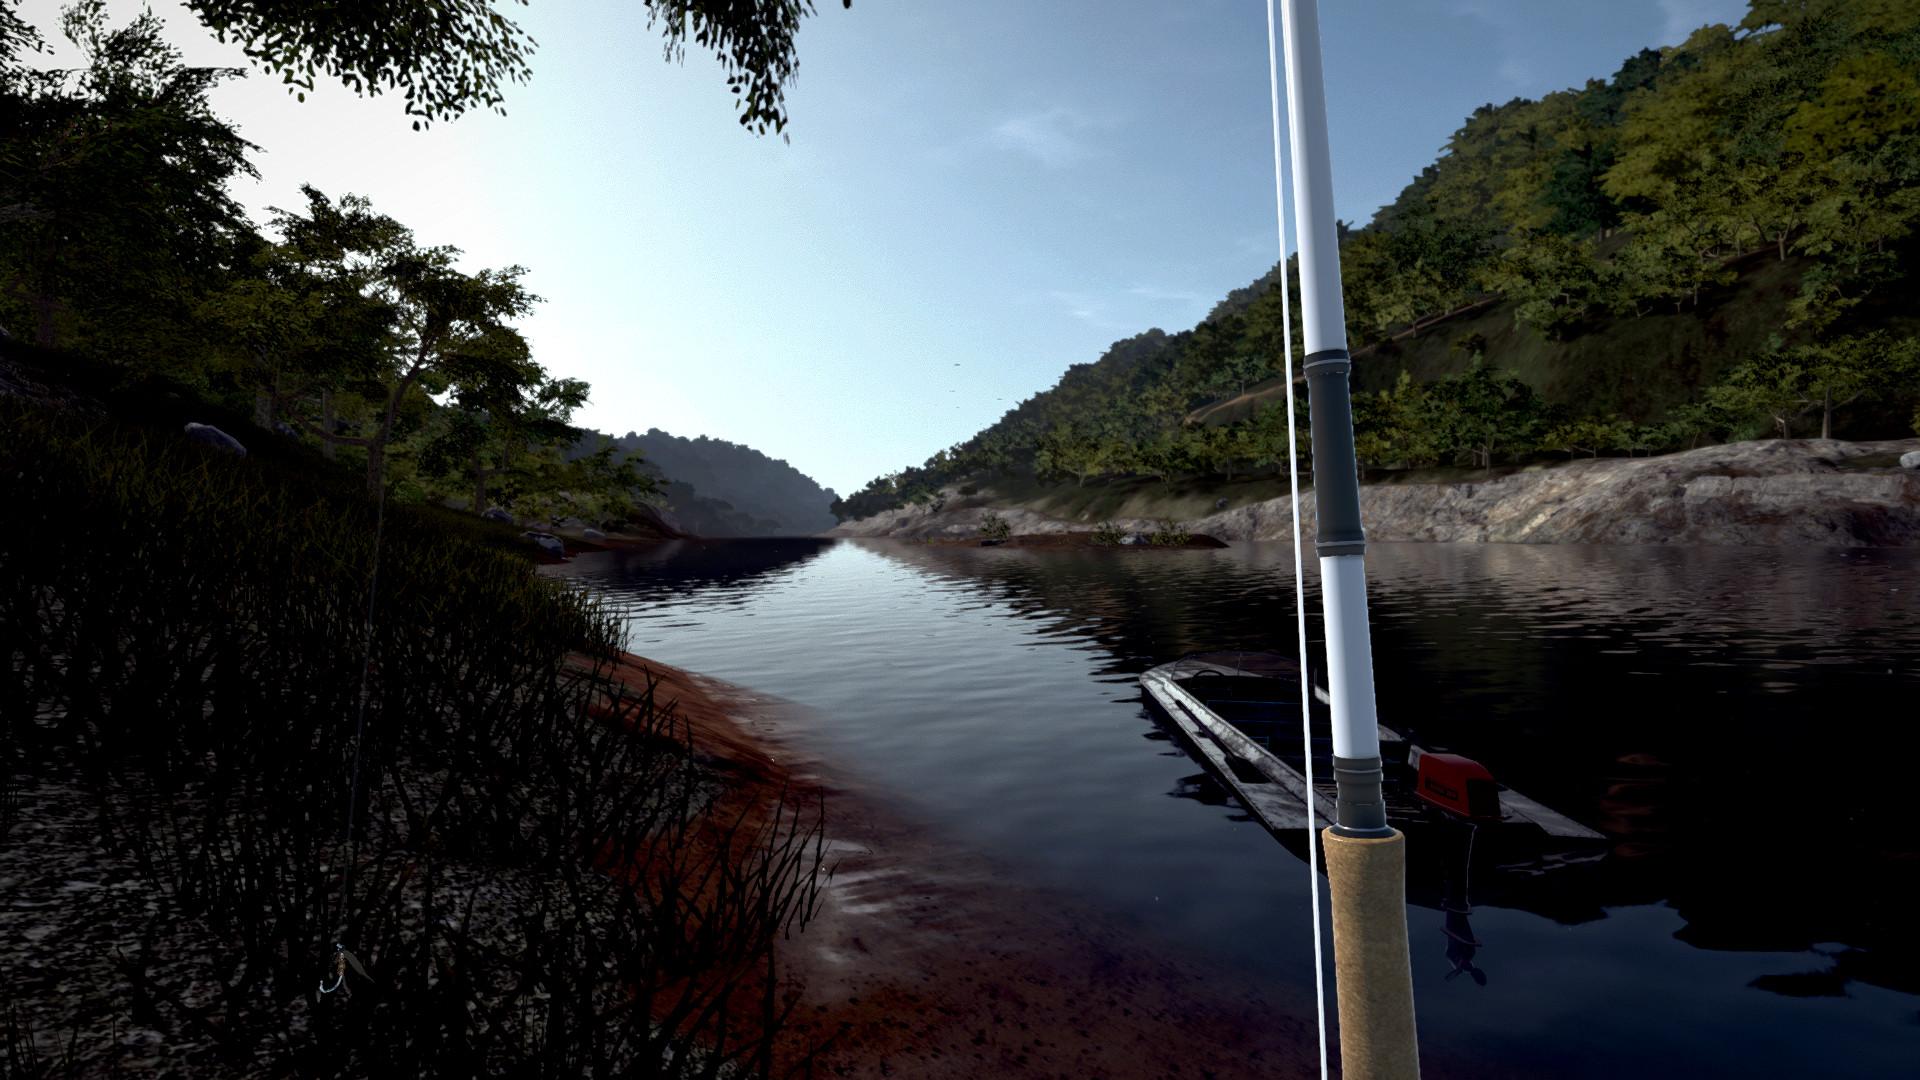 Ultimate Fishing Simulator - Kariba Dam DLC